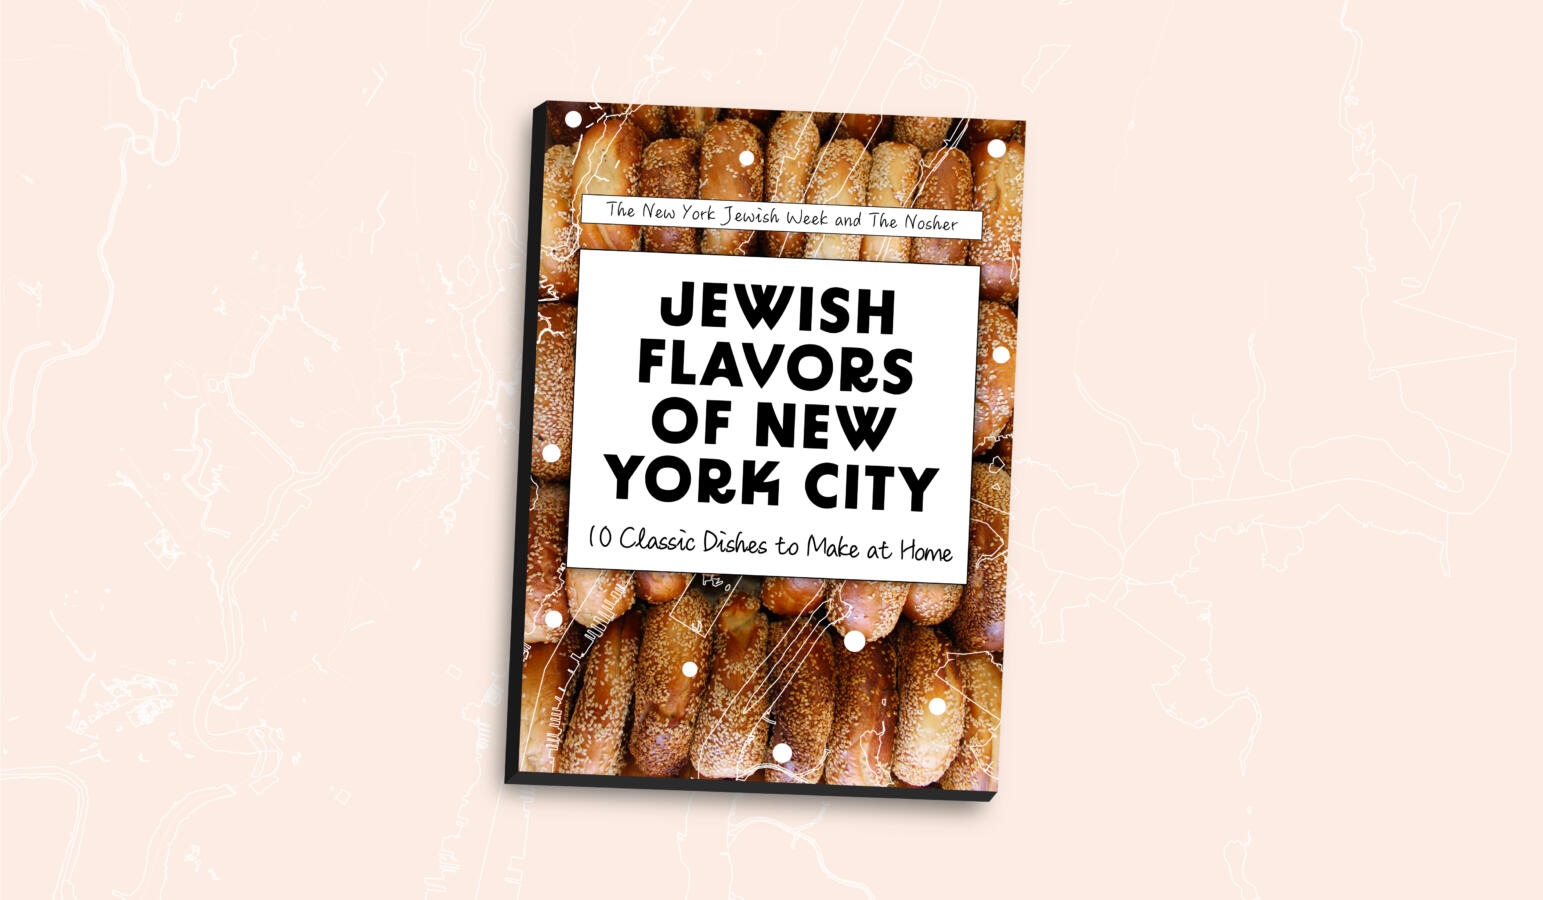 Jewish Flavors of New York City